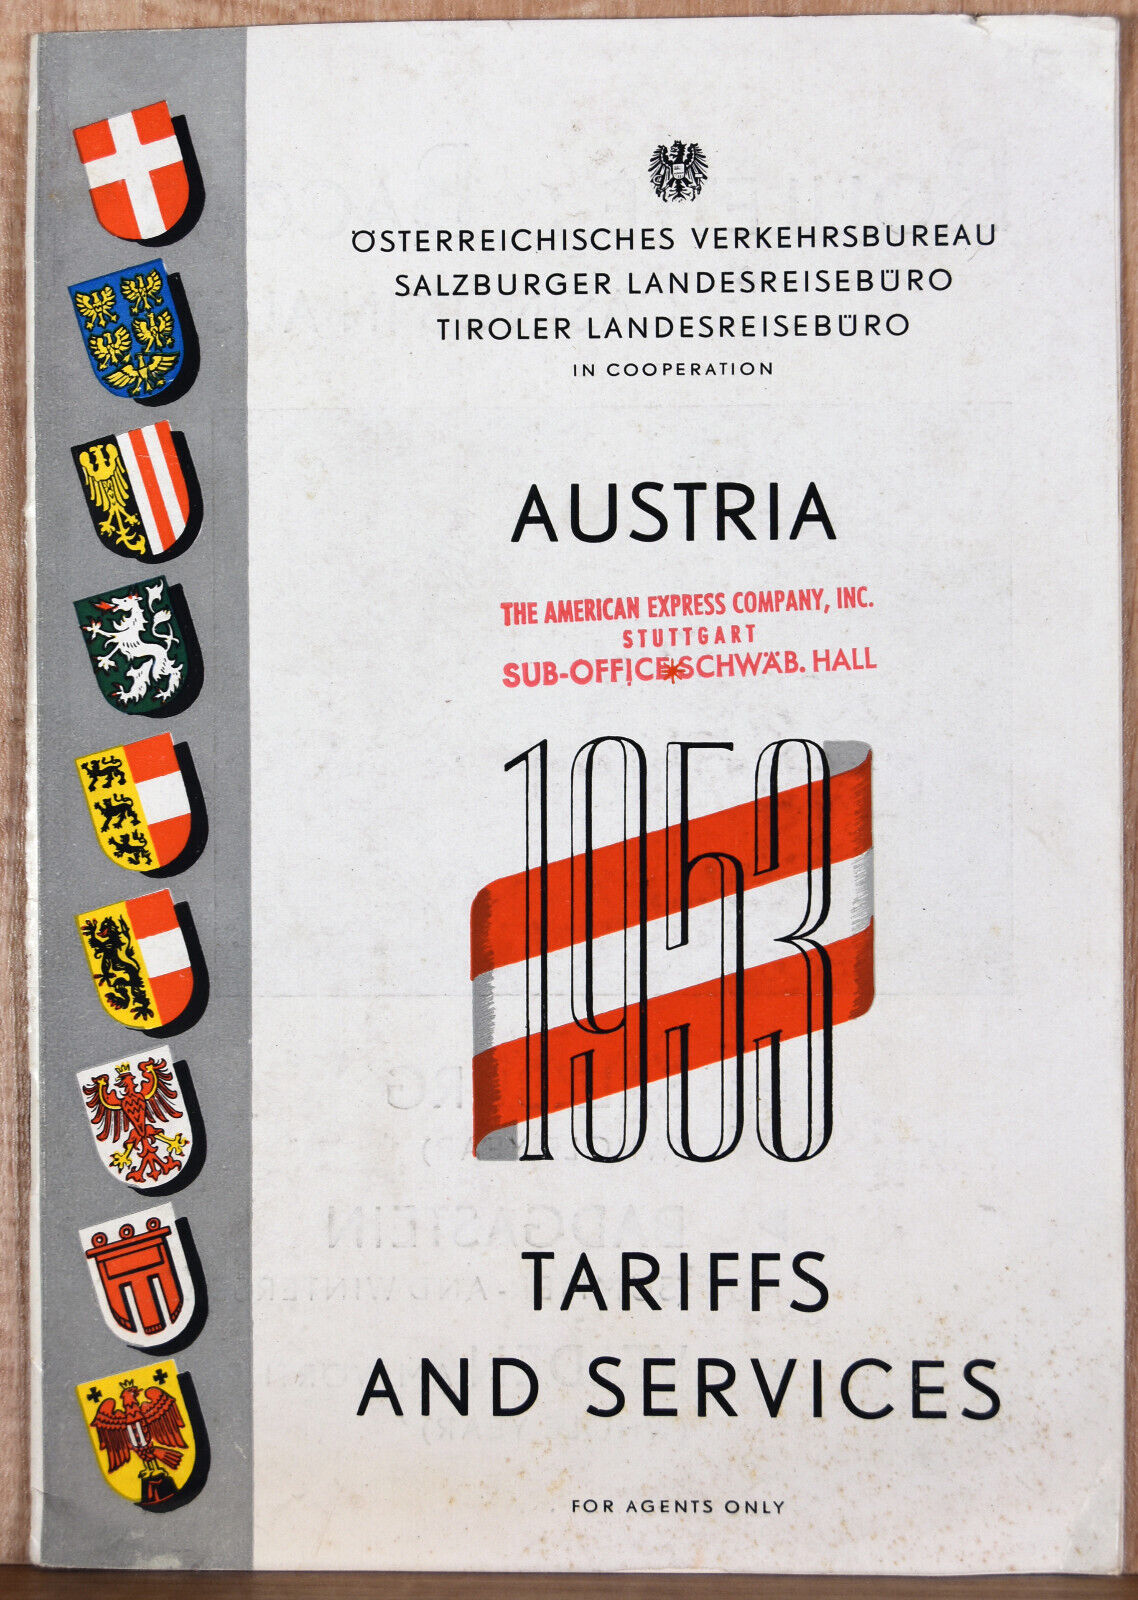 1953 Booklet Advertising Tourism Austria Tariffs Services Vienna Verkehrsbureau